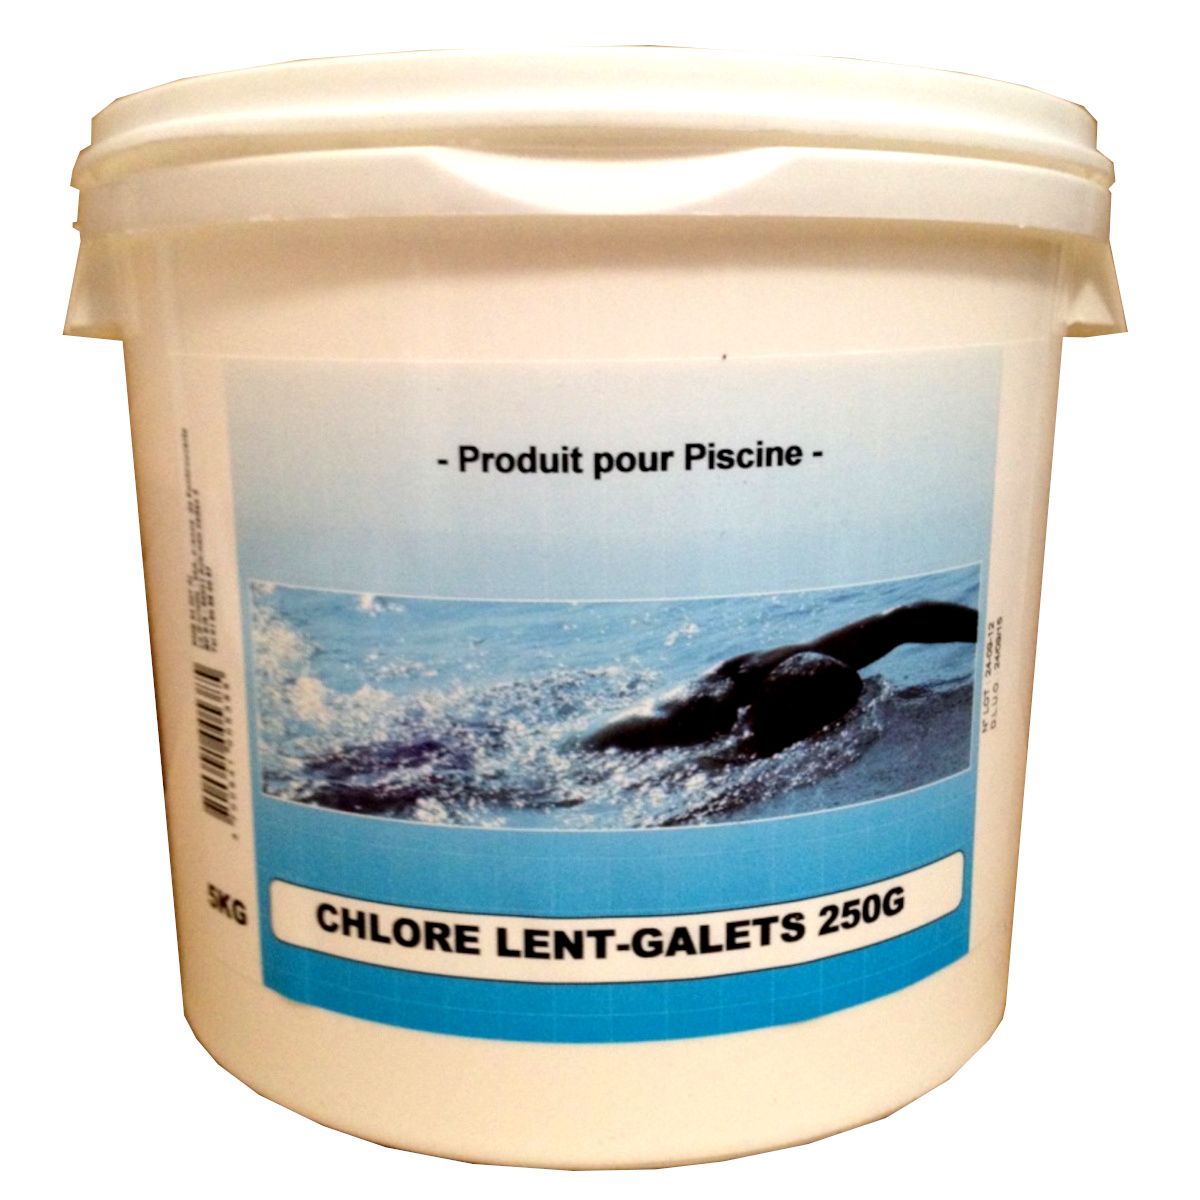 Nmp Chlore lent galet 250g 5kg - 37040